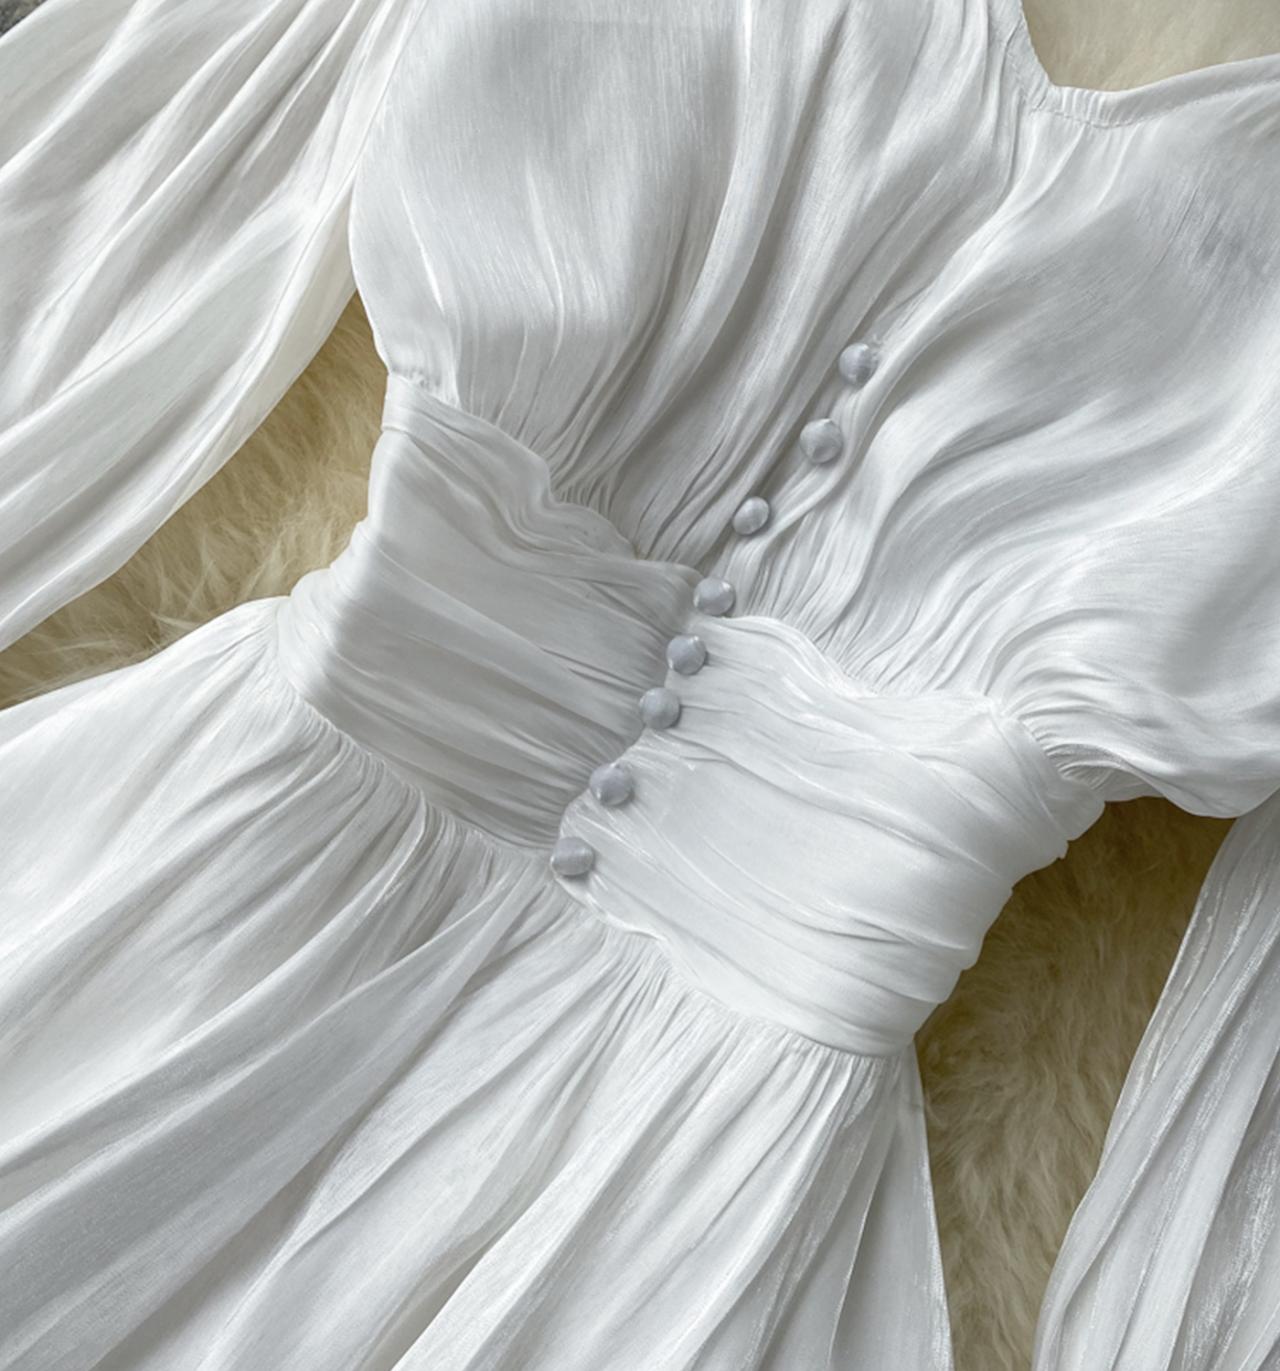 Süßes langärmliges kurzes Kleid Modekleid 648 